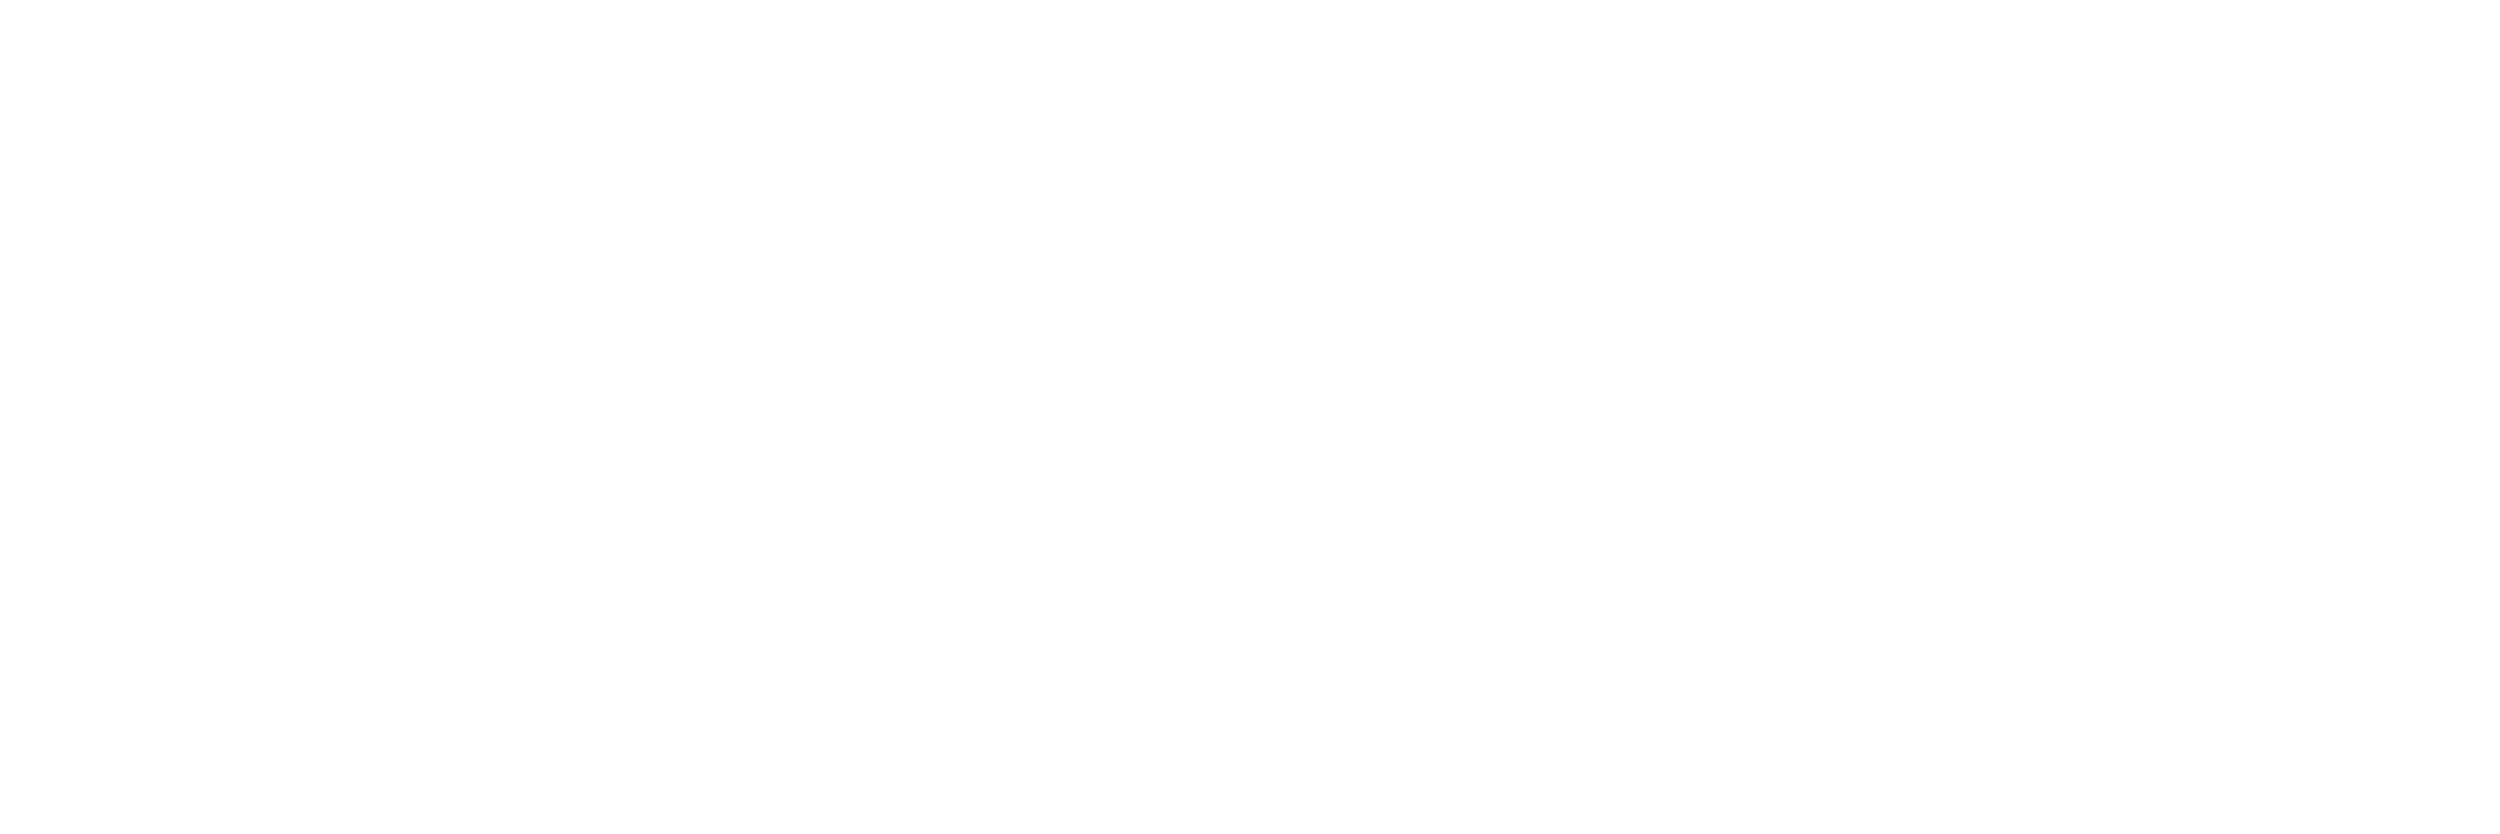 Rhino Pest Control Marketing